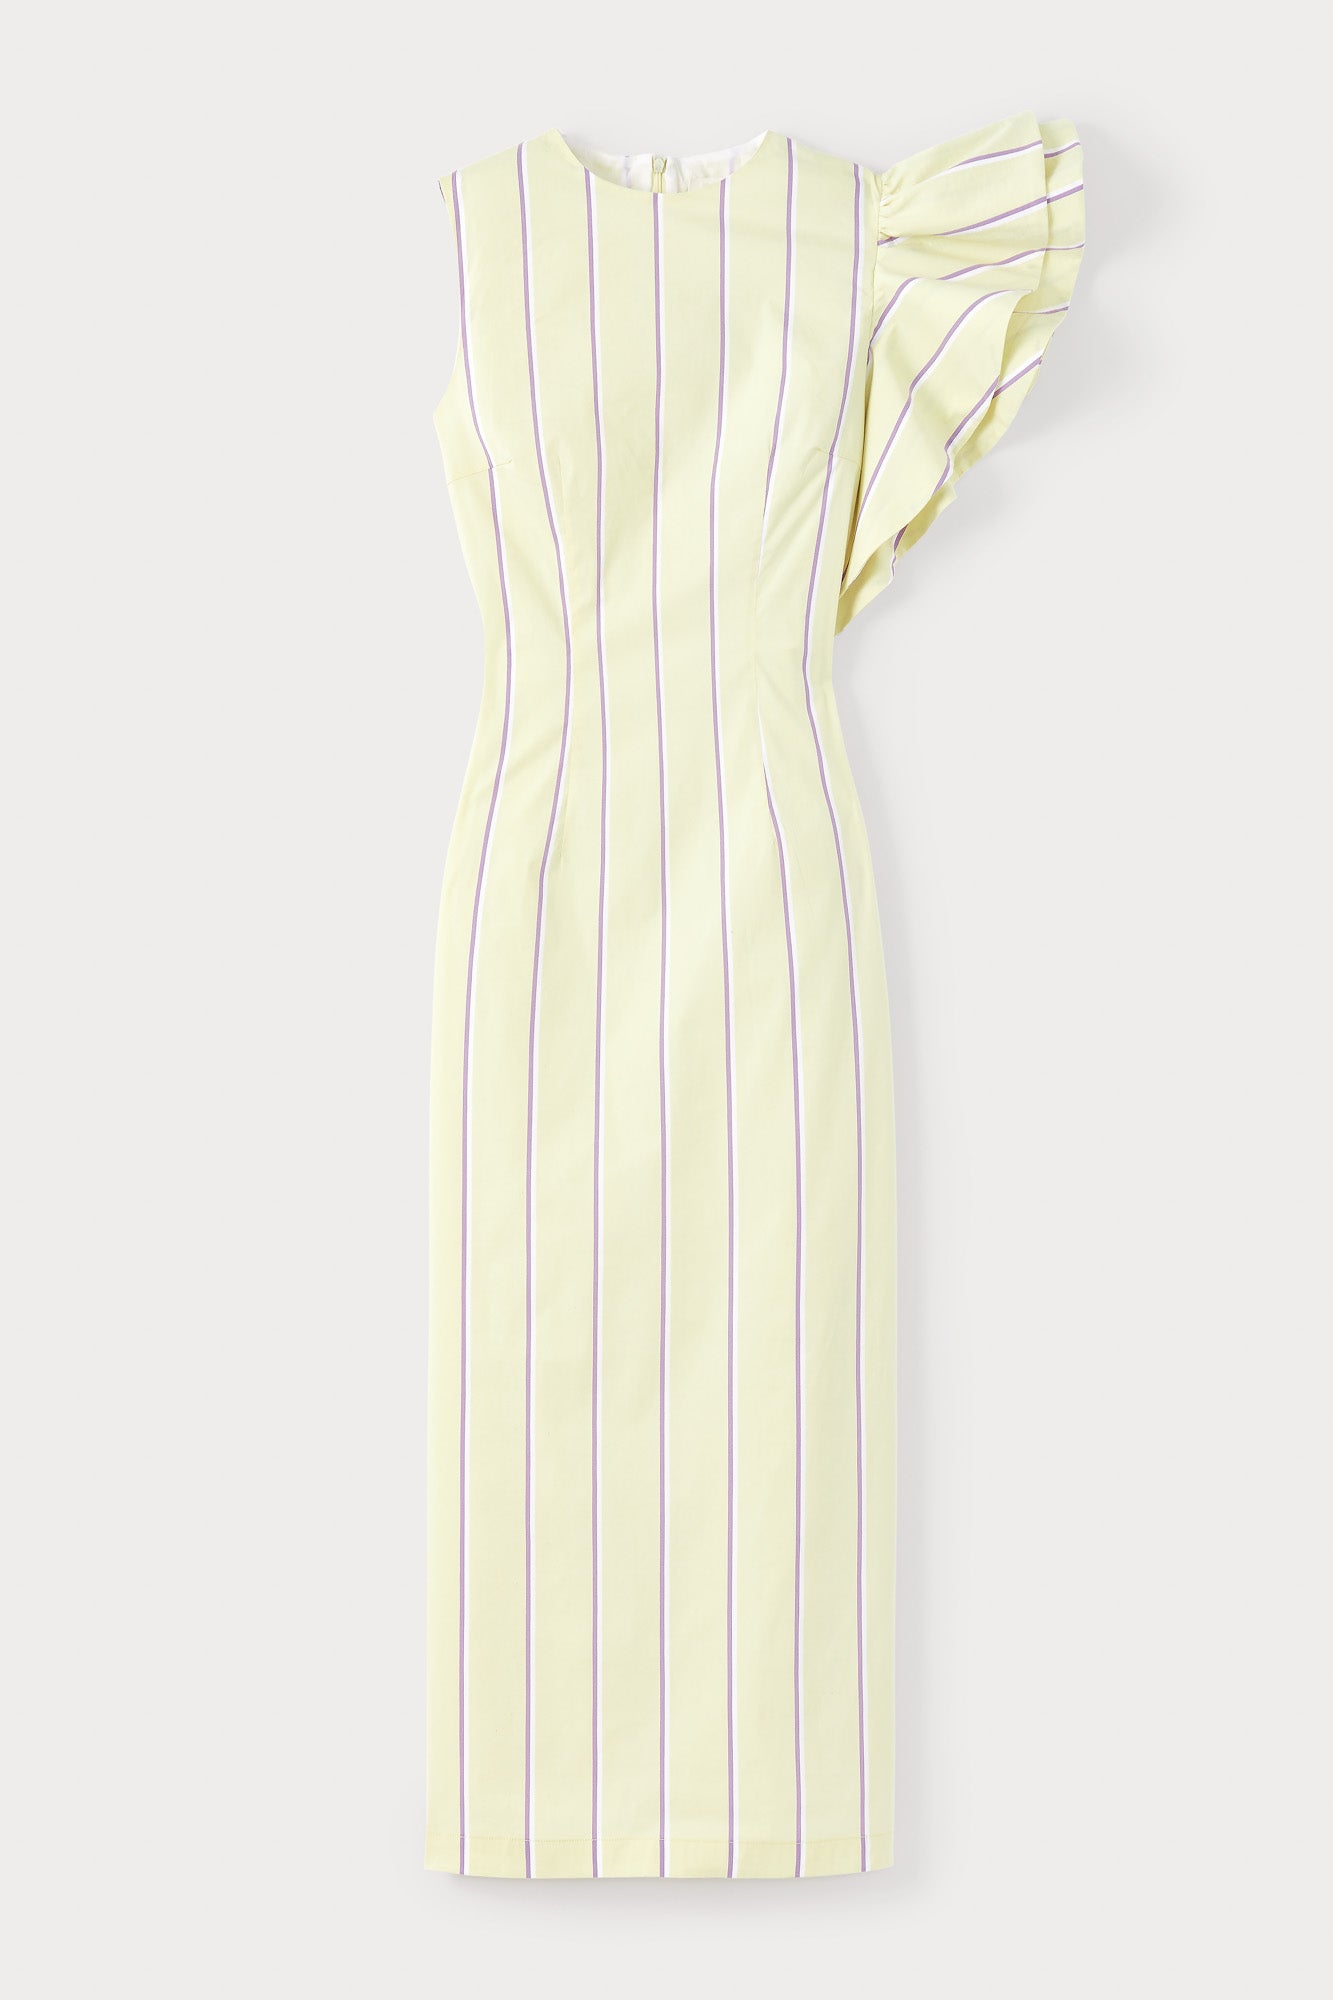 PALE YELLOW & LILAC Striped Dress with Asymmetric Ruffle Detail